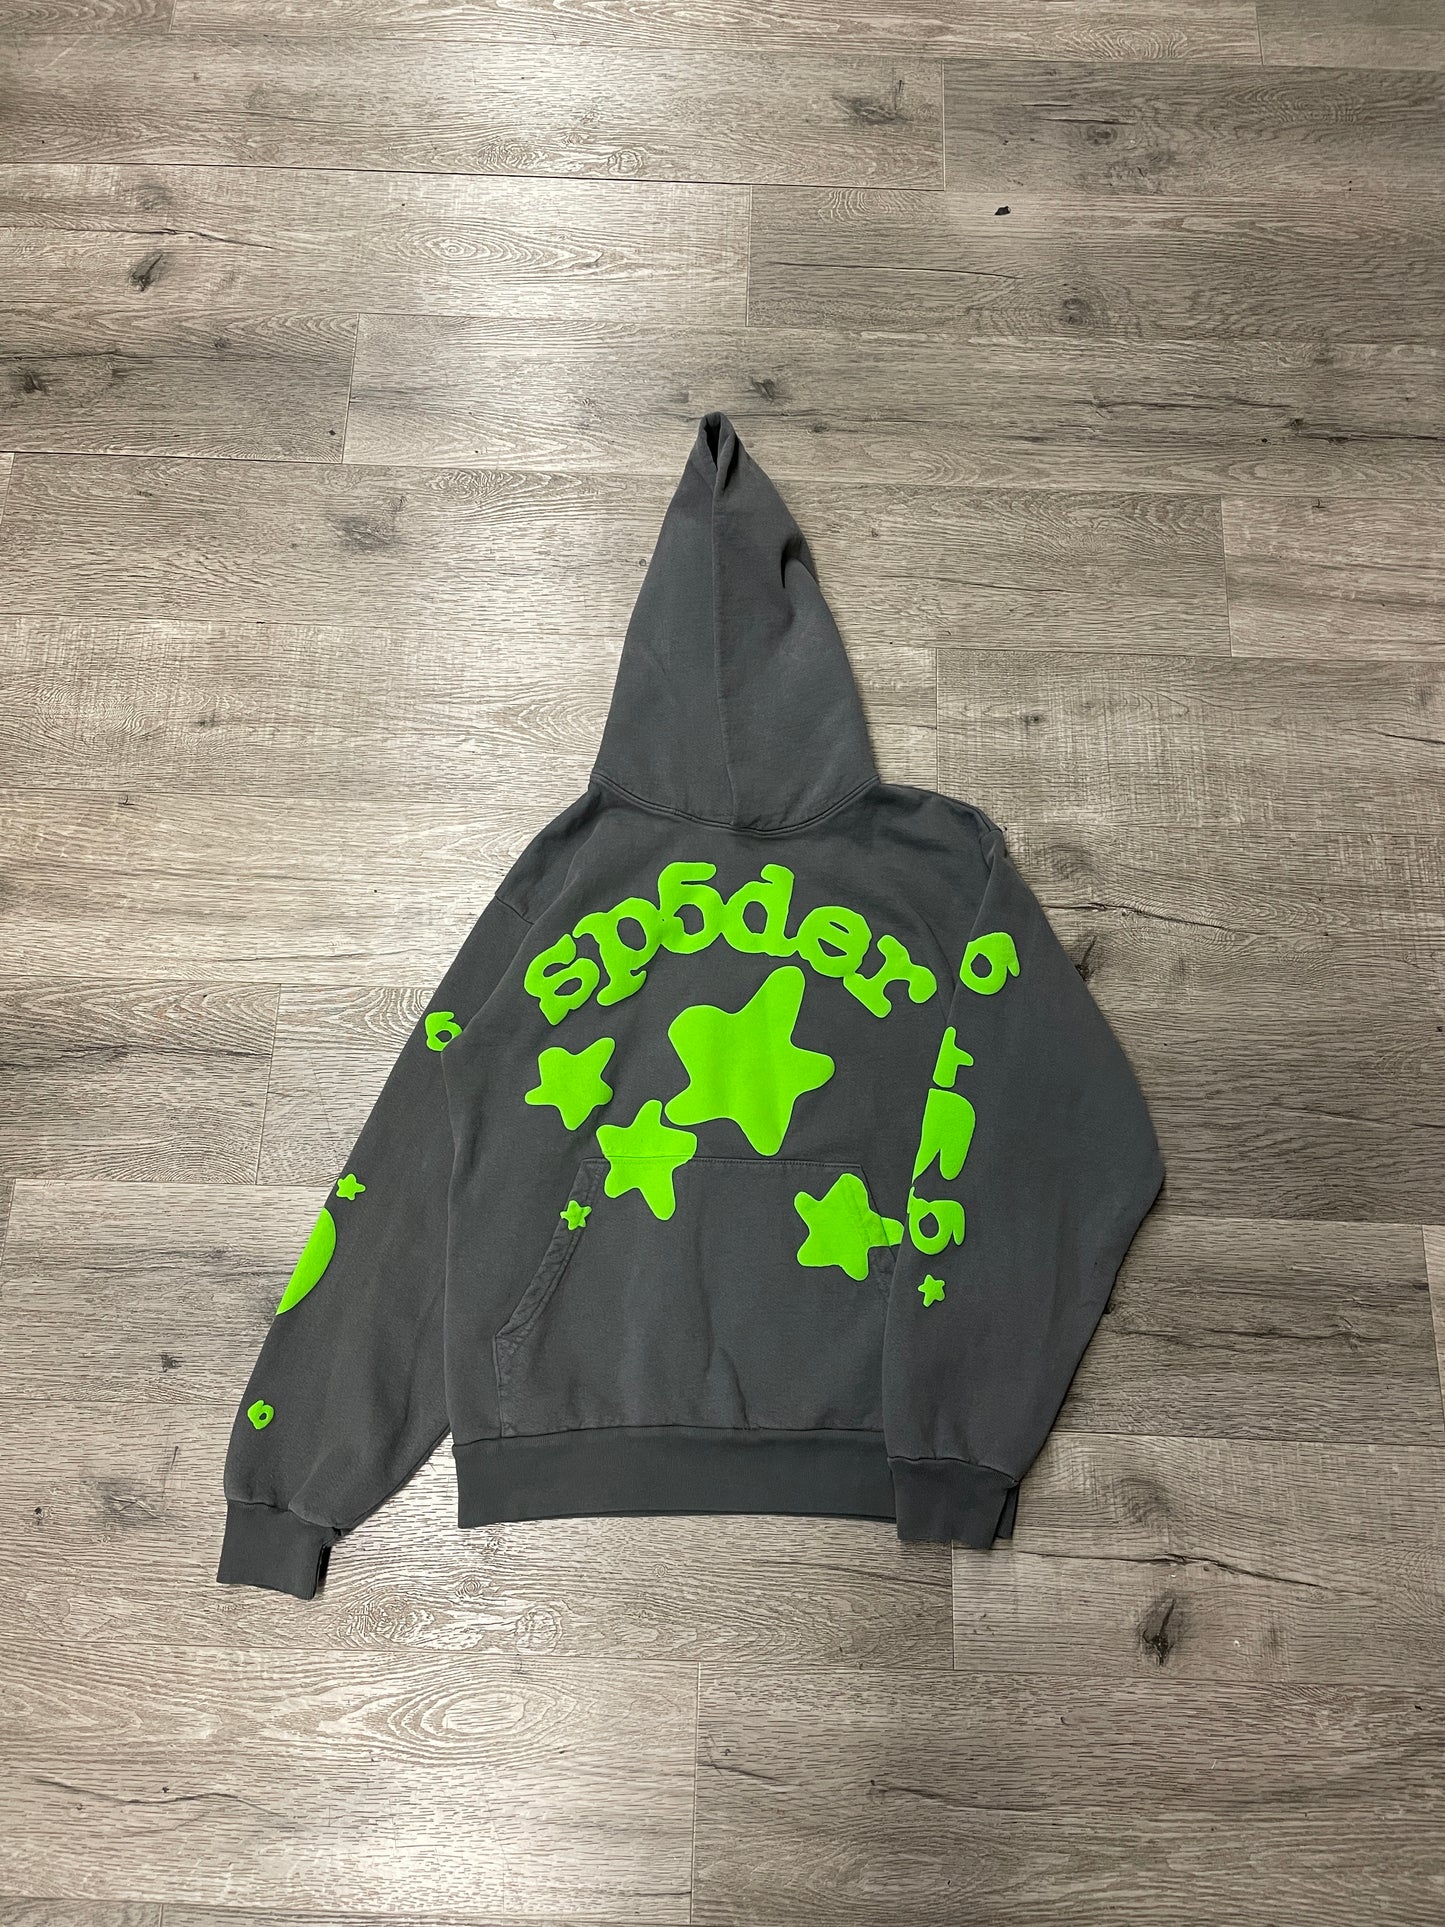 Sp5der Grey/Green Hood